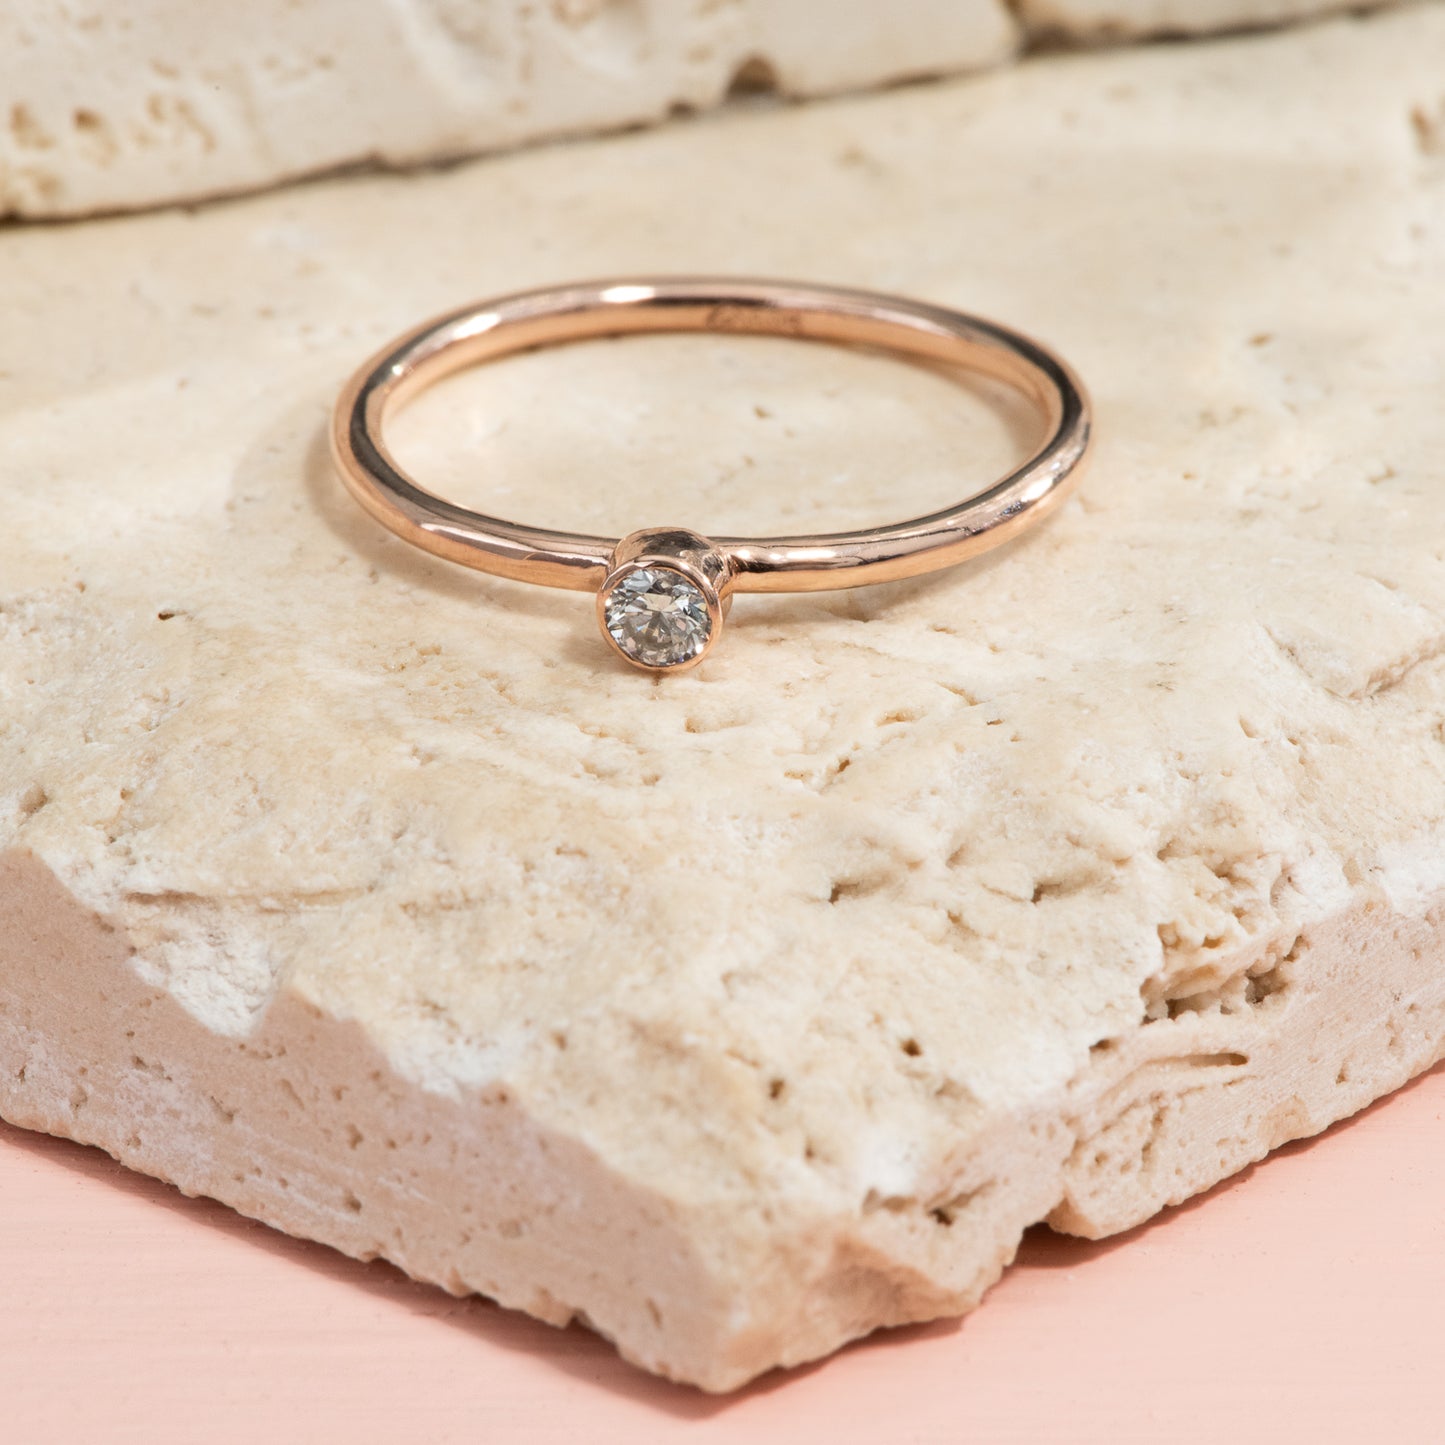 Highly polished rose gold ring with one bezel set diamond.